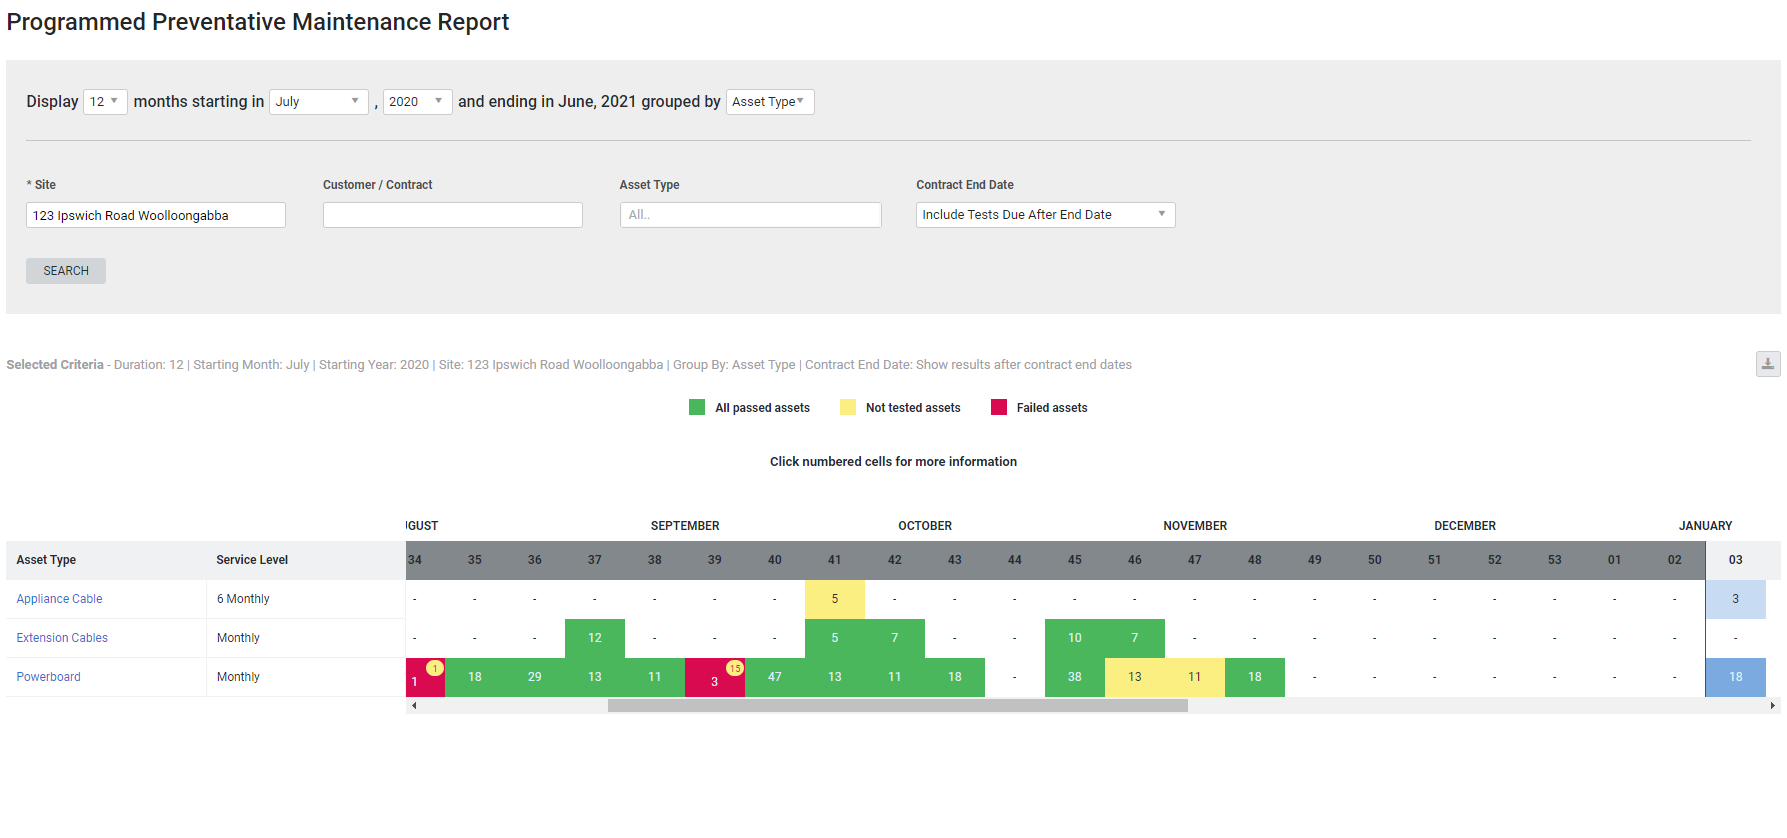 A screenshot of the Programmed Preventative Maintenance Report.